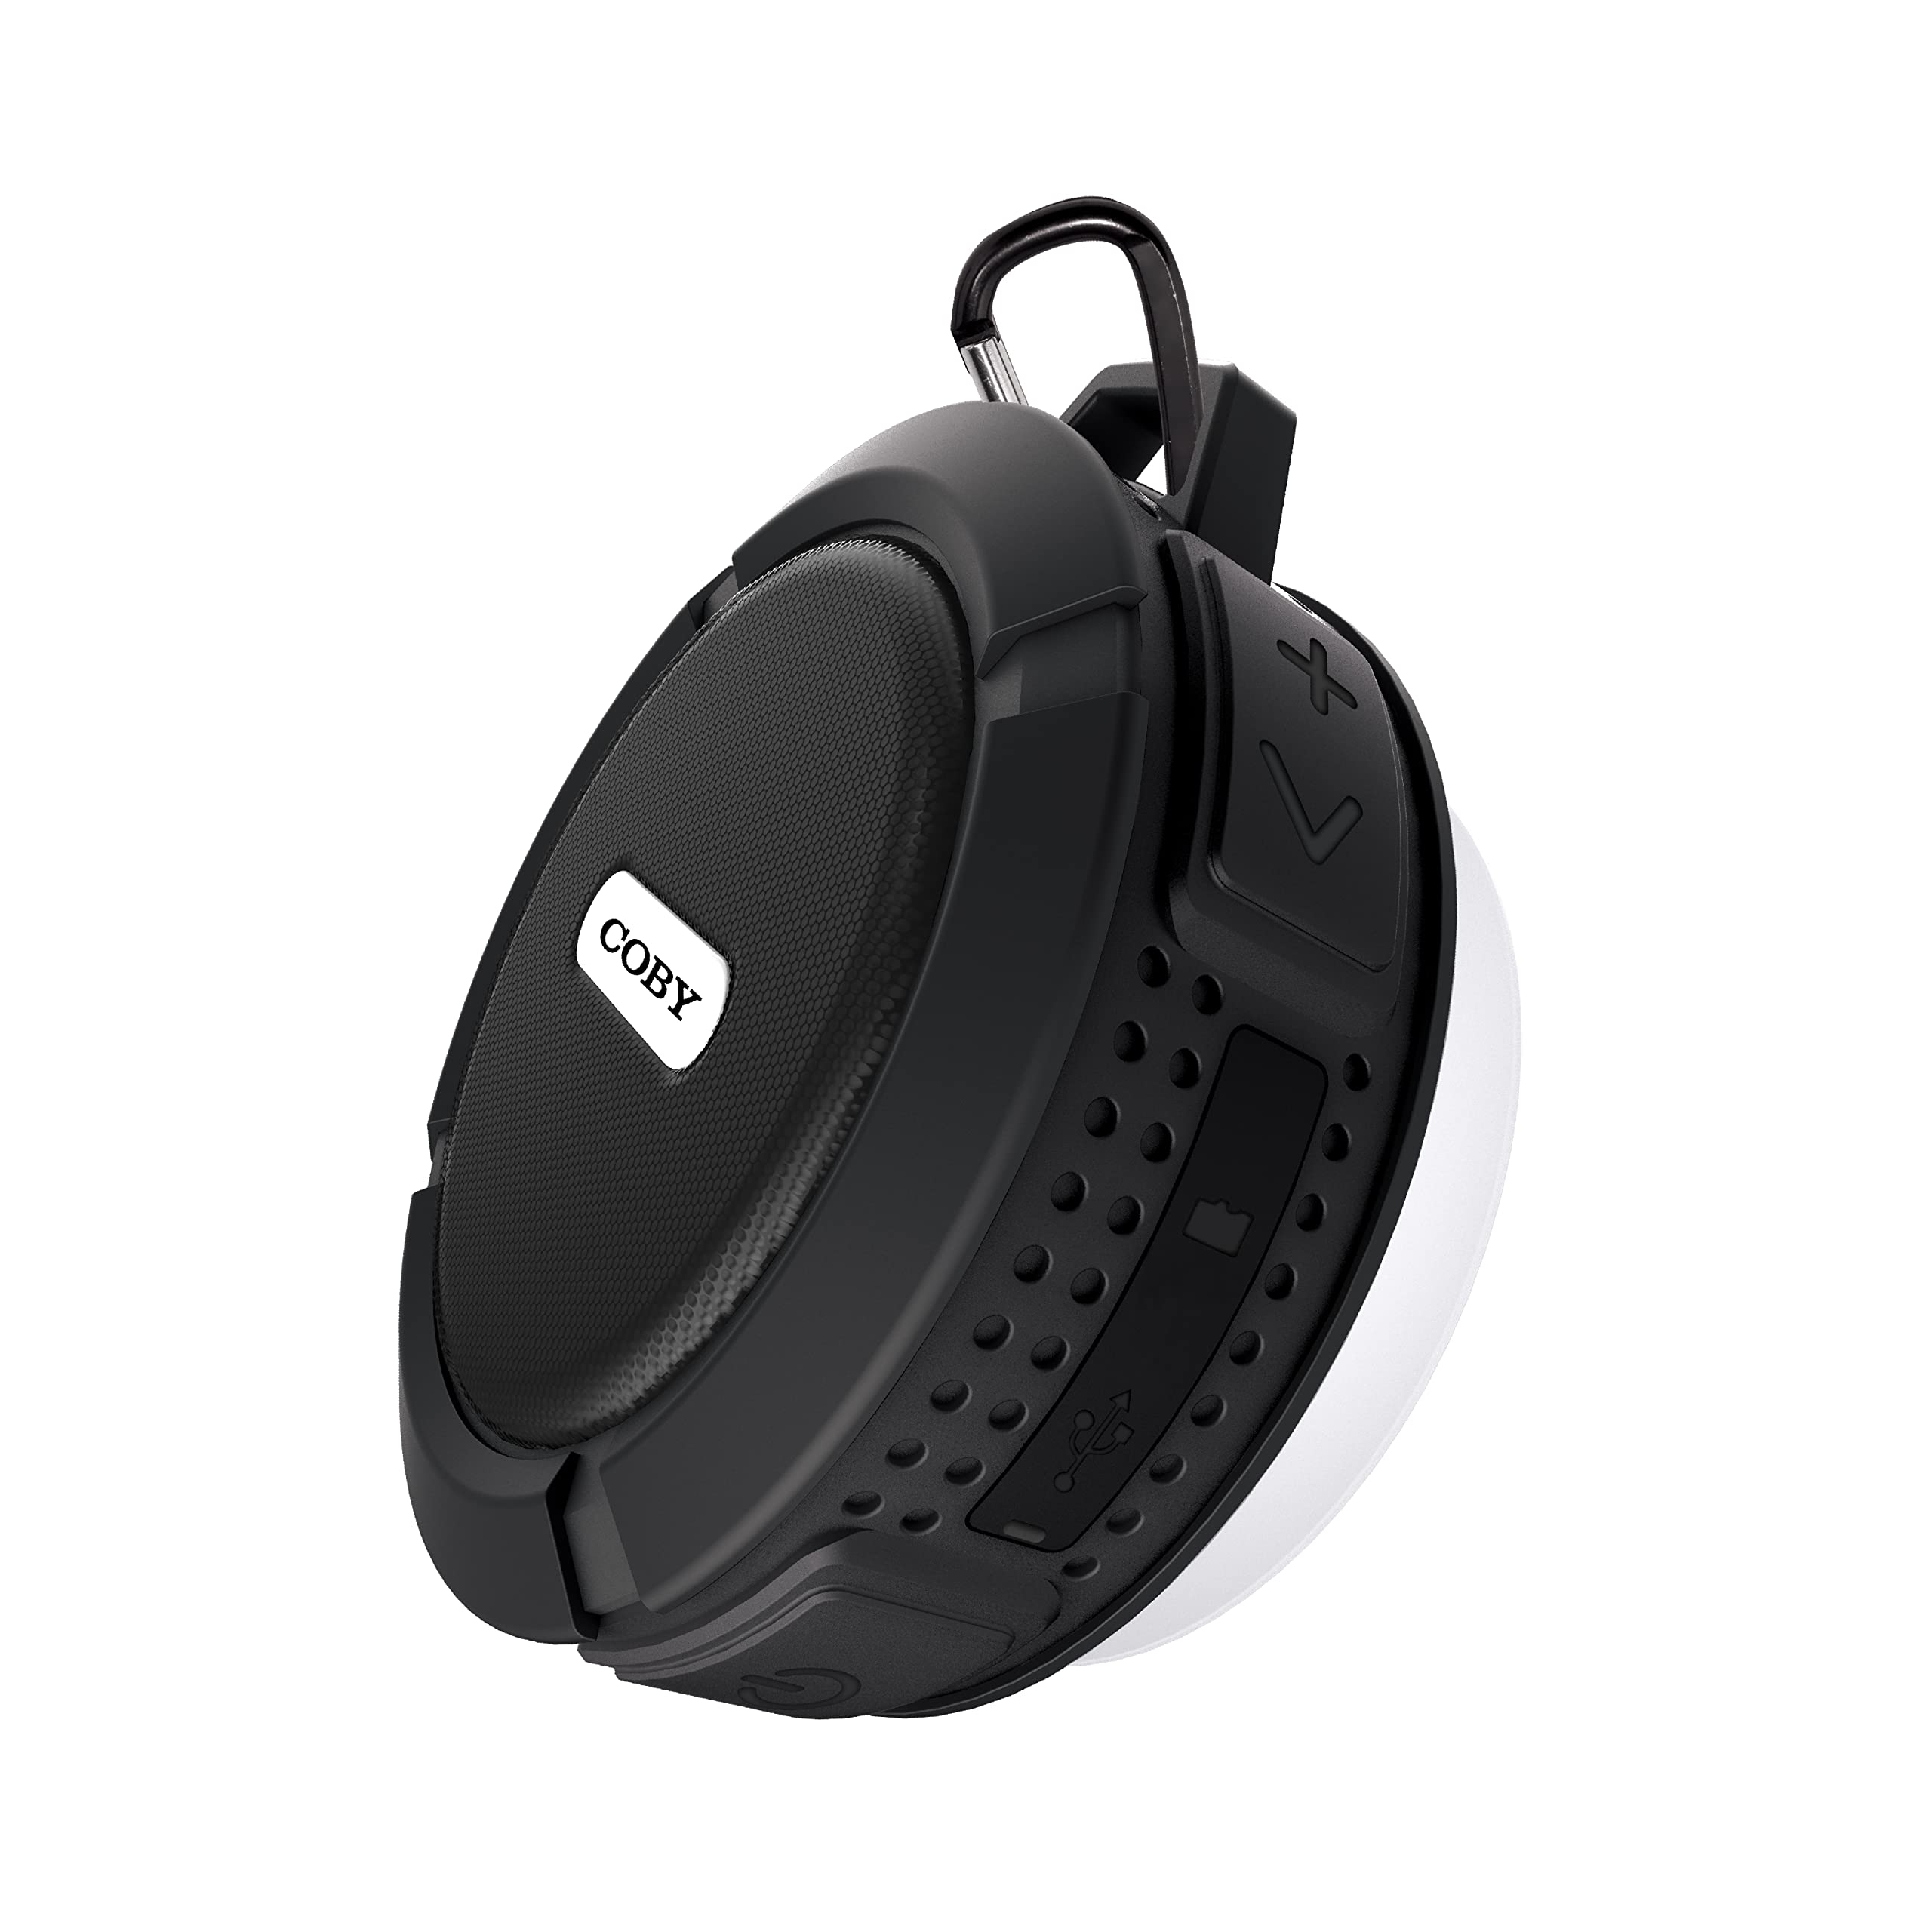 Coby Rugged Gear Bluetooth-Speaker, Red Bluetooth-Shower-Speaker